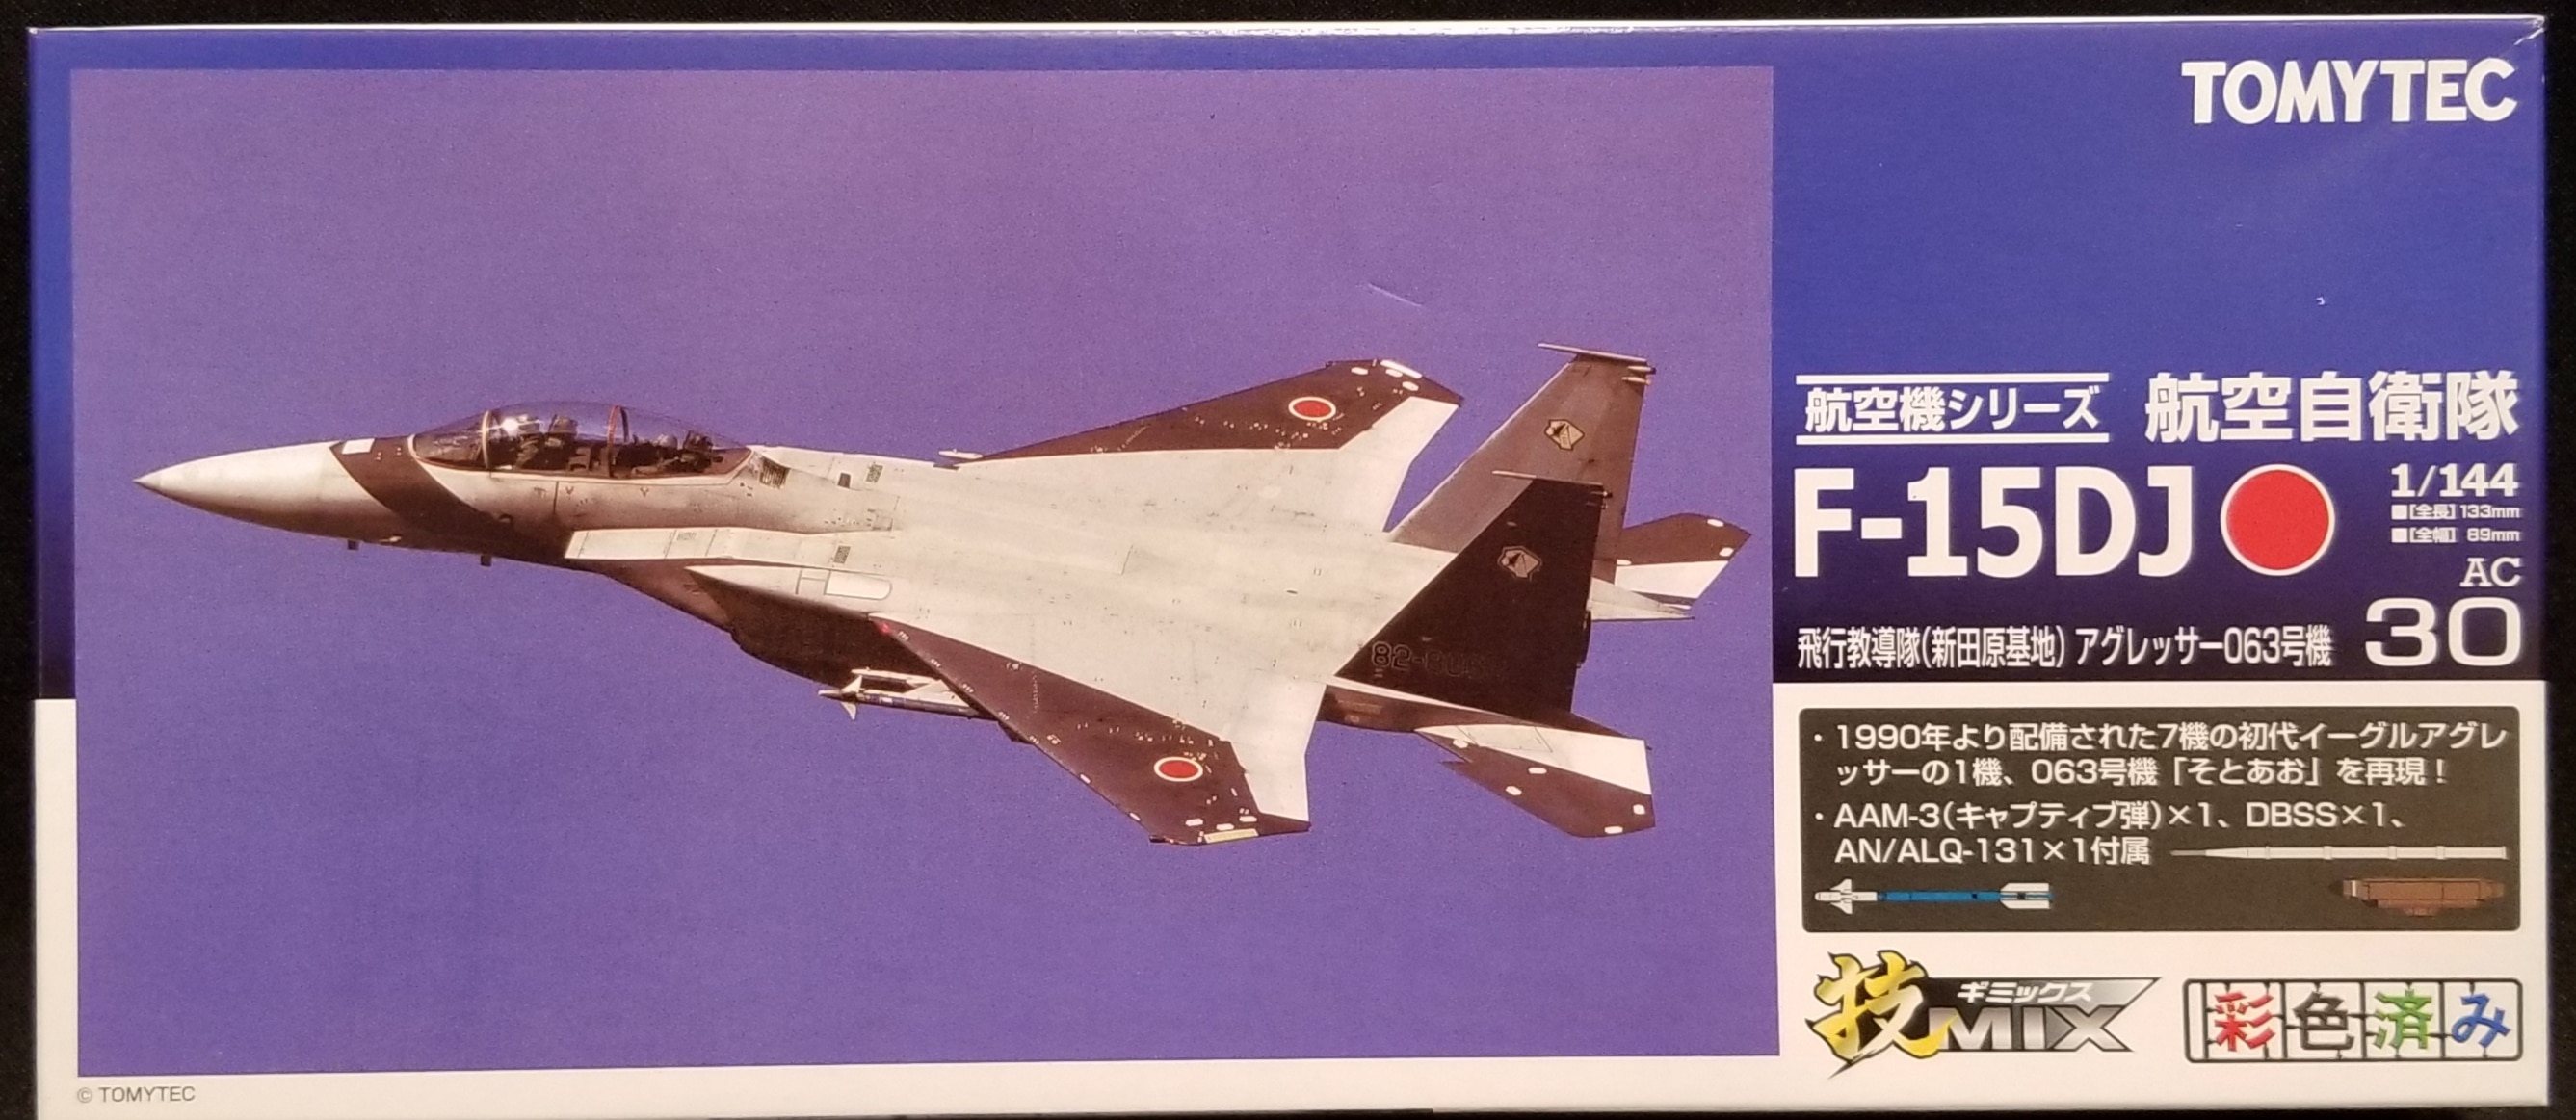 箱難有 技MIX F-15DJ 飛行教導隊(新田原基地)アグレッサー063号機 